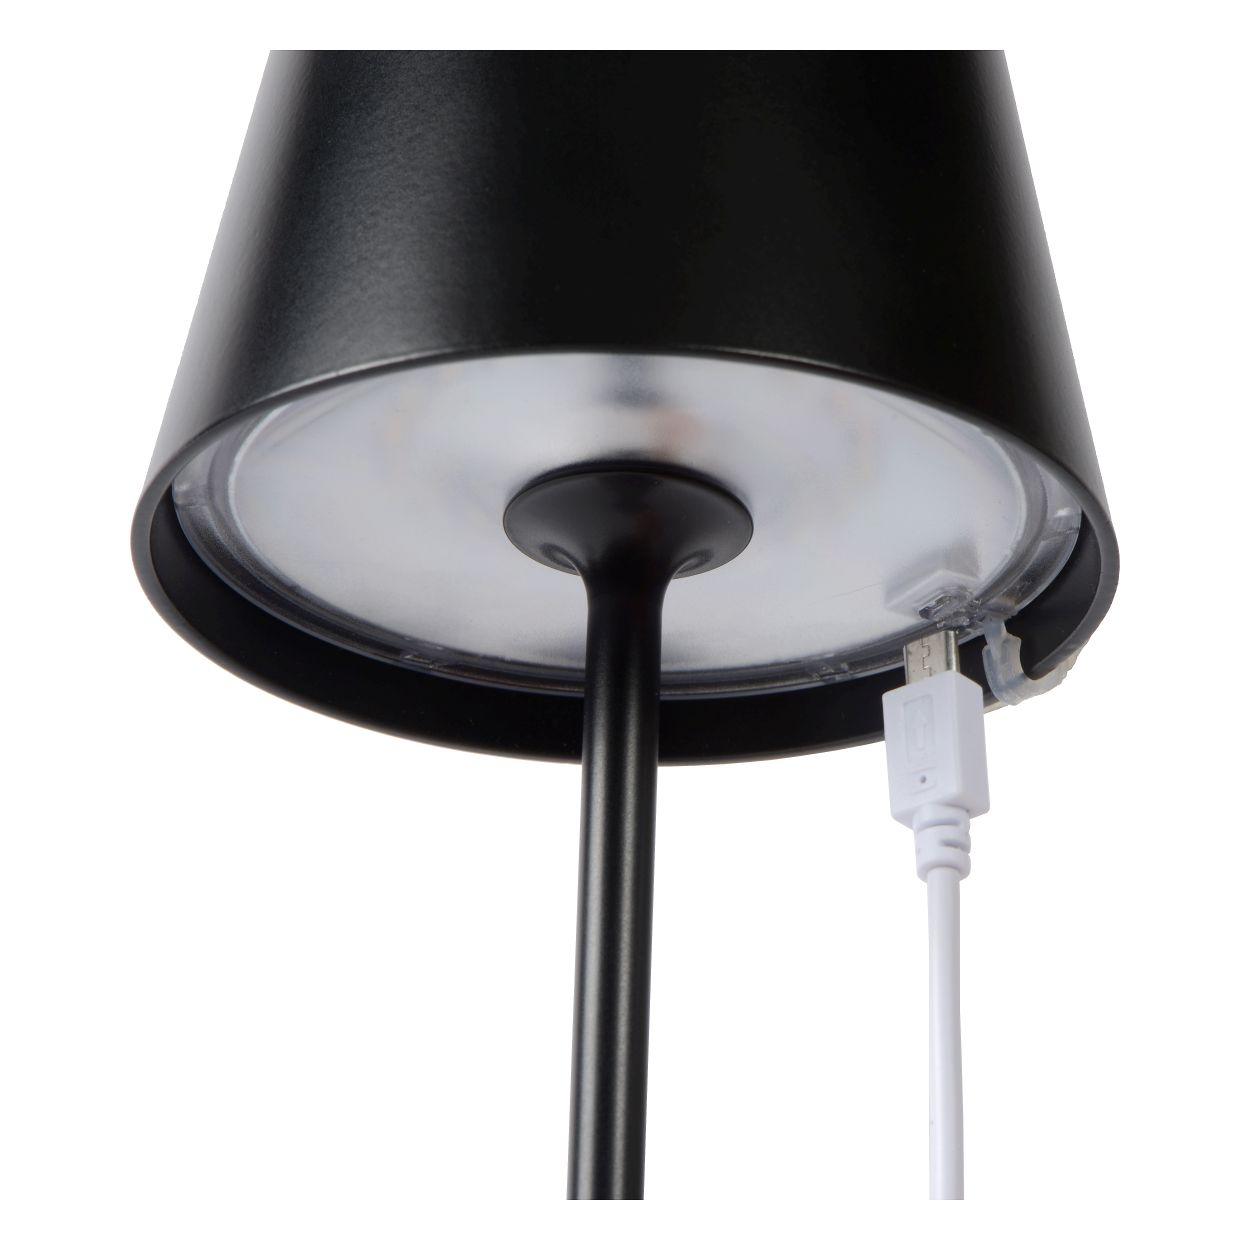 Lucide JUSTIN - Oplaadbare Tafellamp Buiten - Accu/Batterij - Ø 11 cm - LED Dimb. - 1x2,2W 3000K - IP54 - 3 StepDim - Zwart